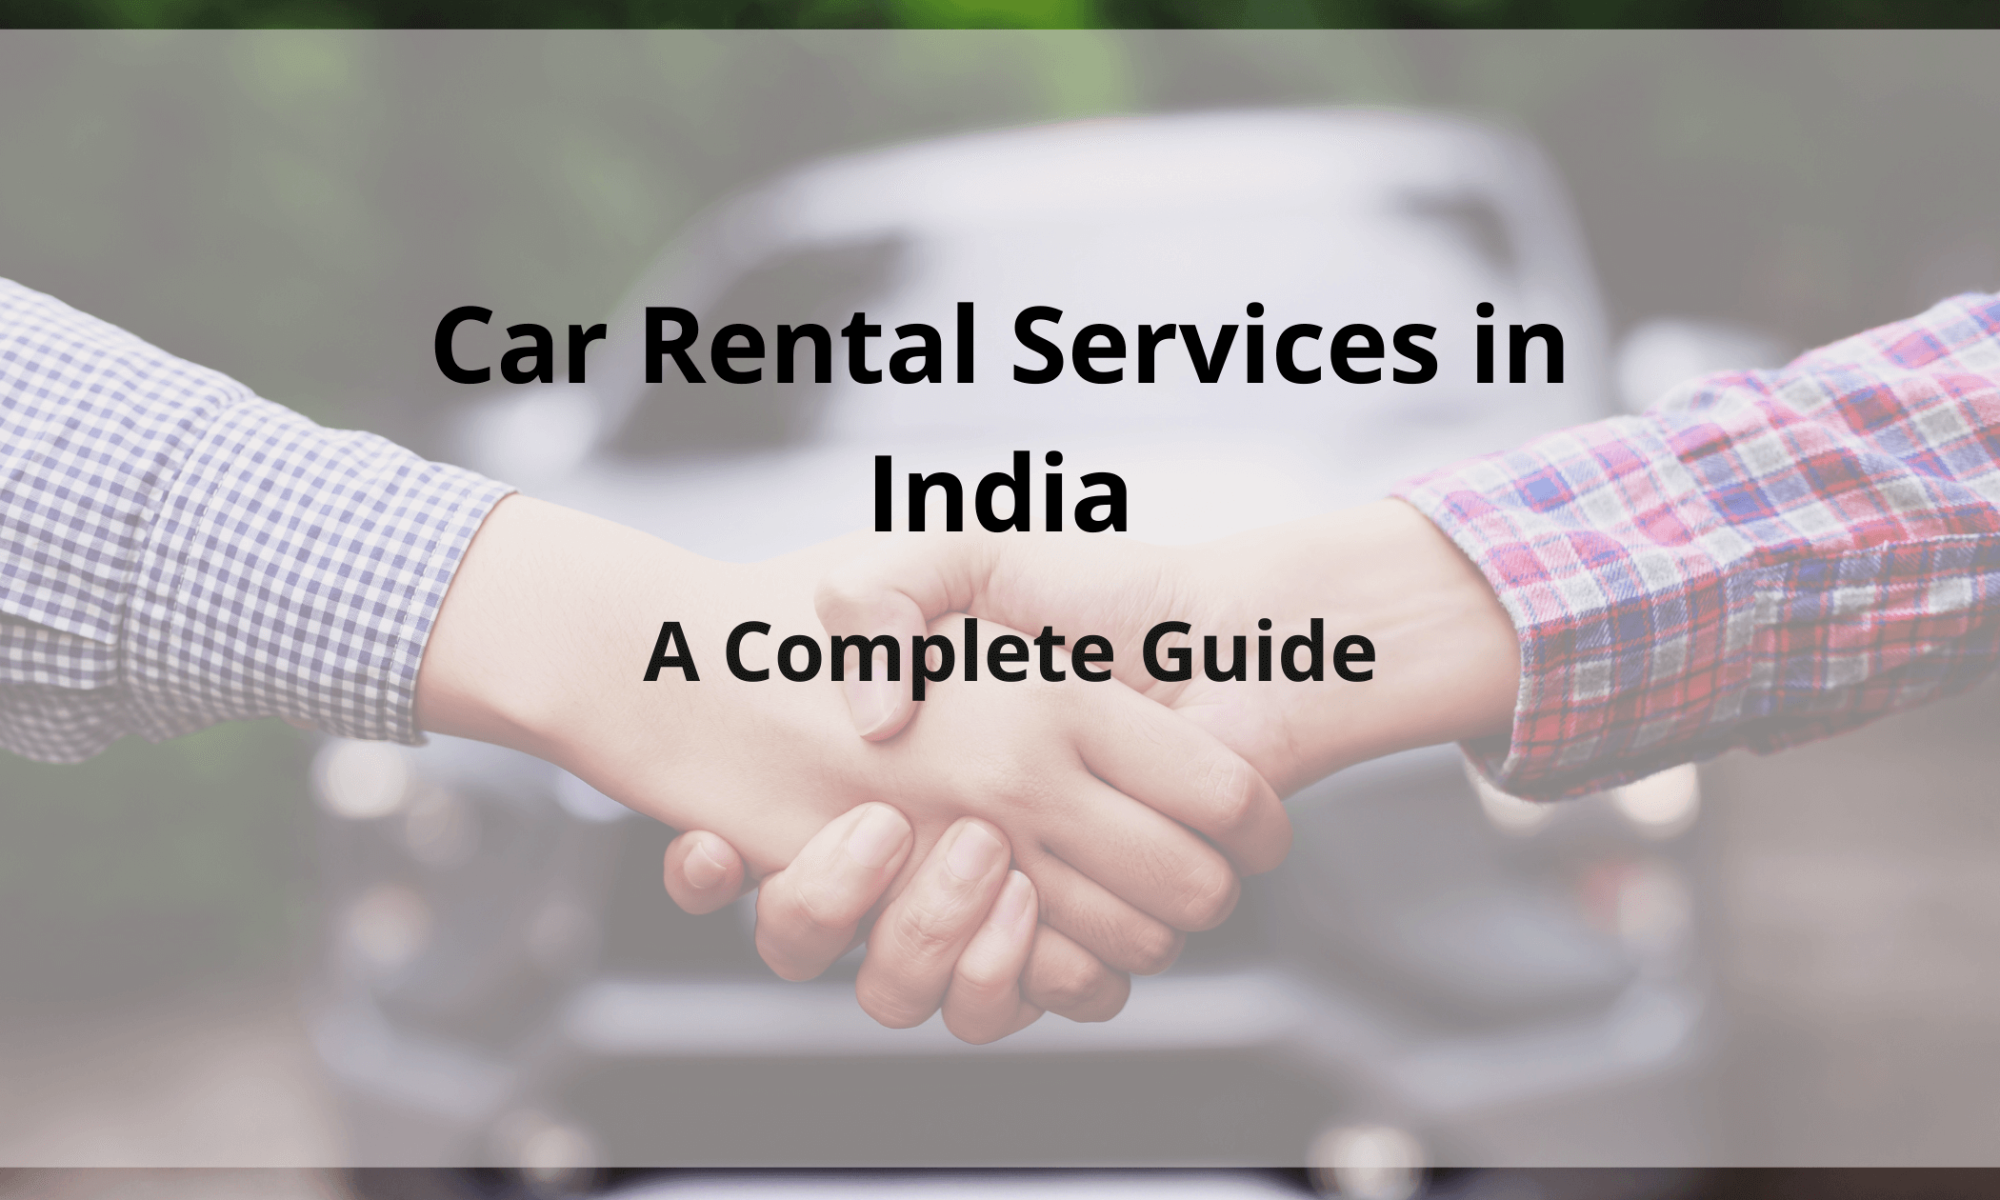 Car rental services